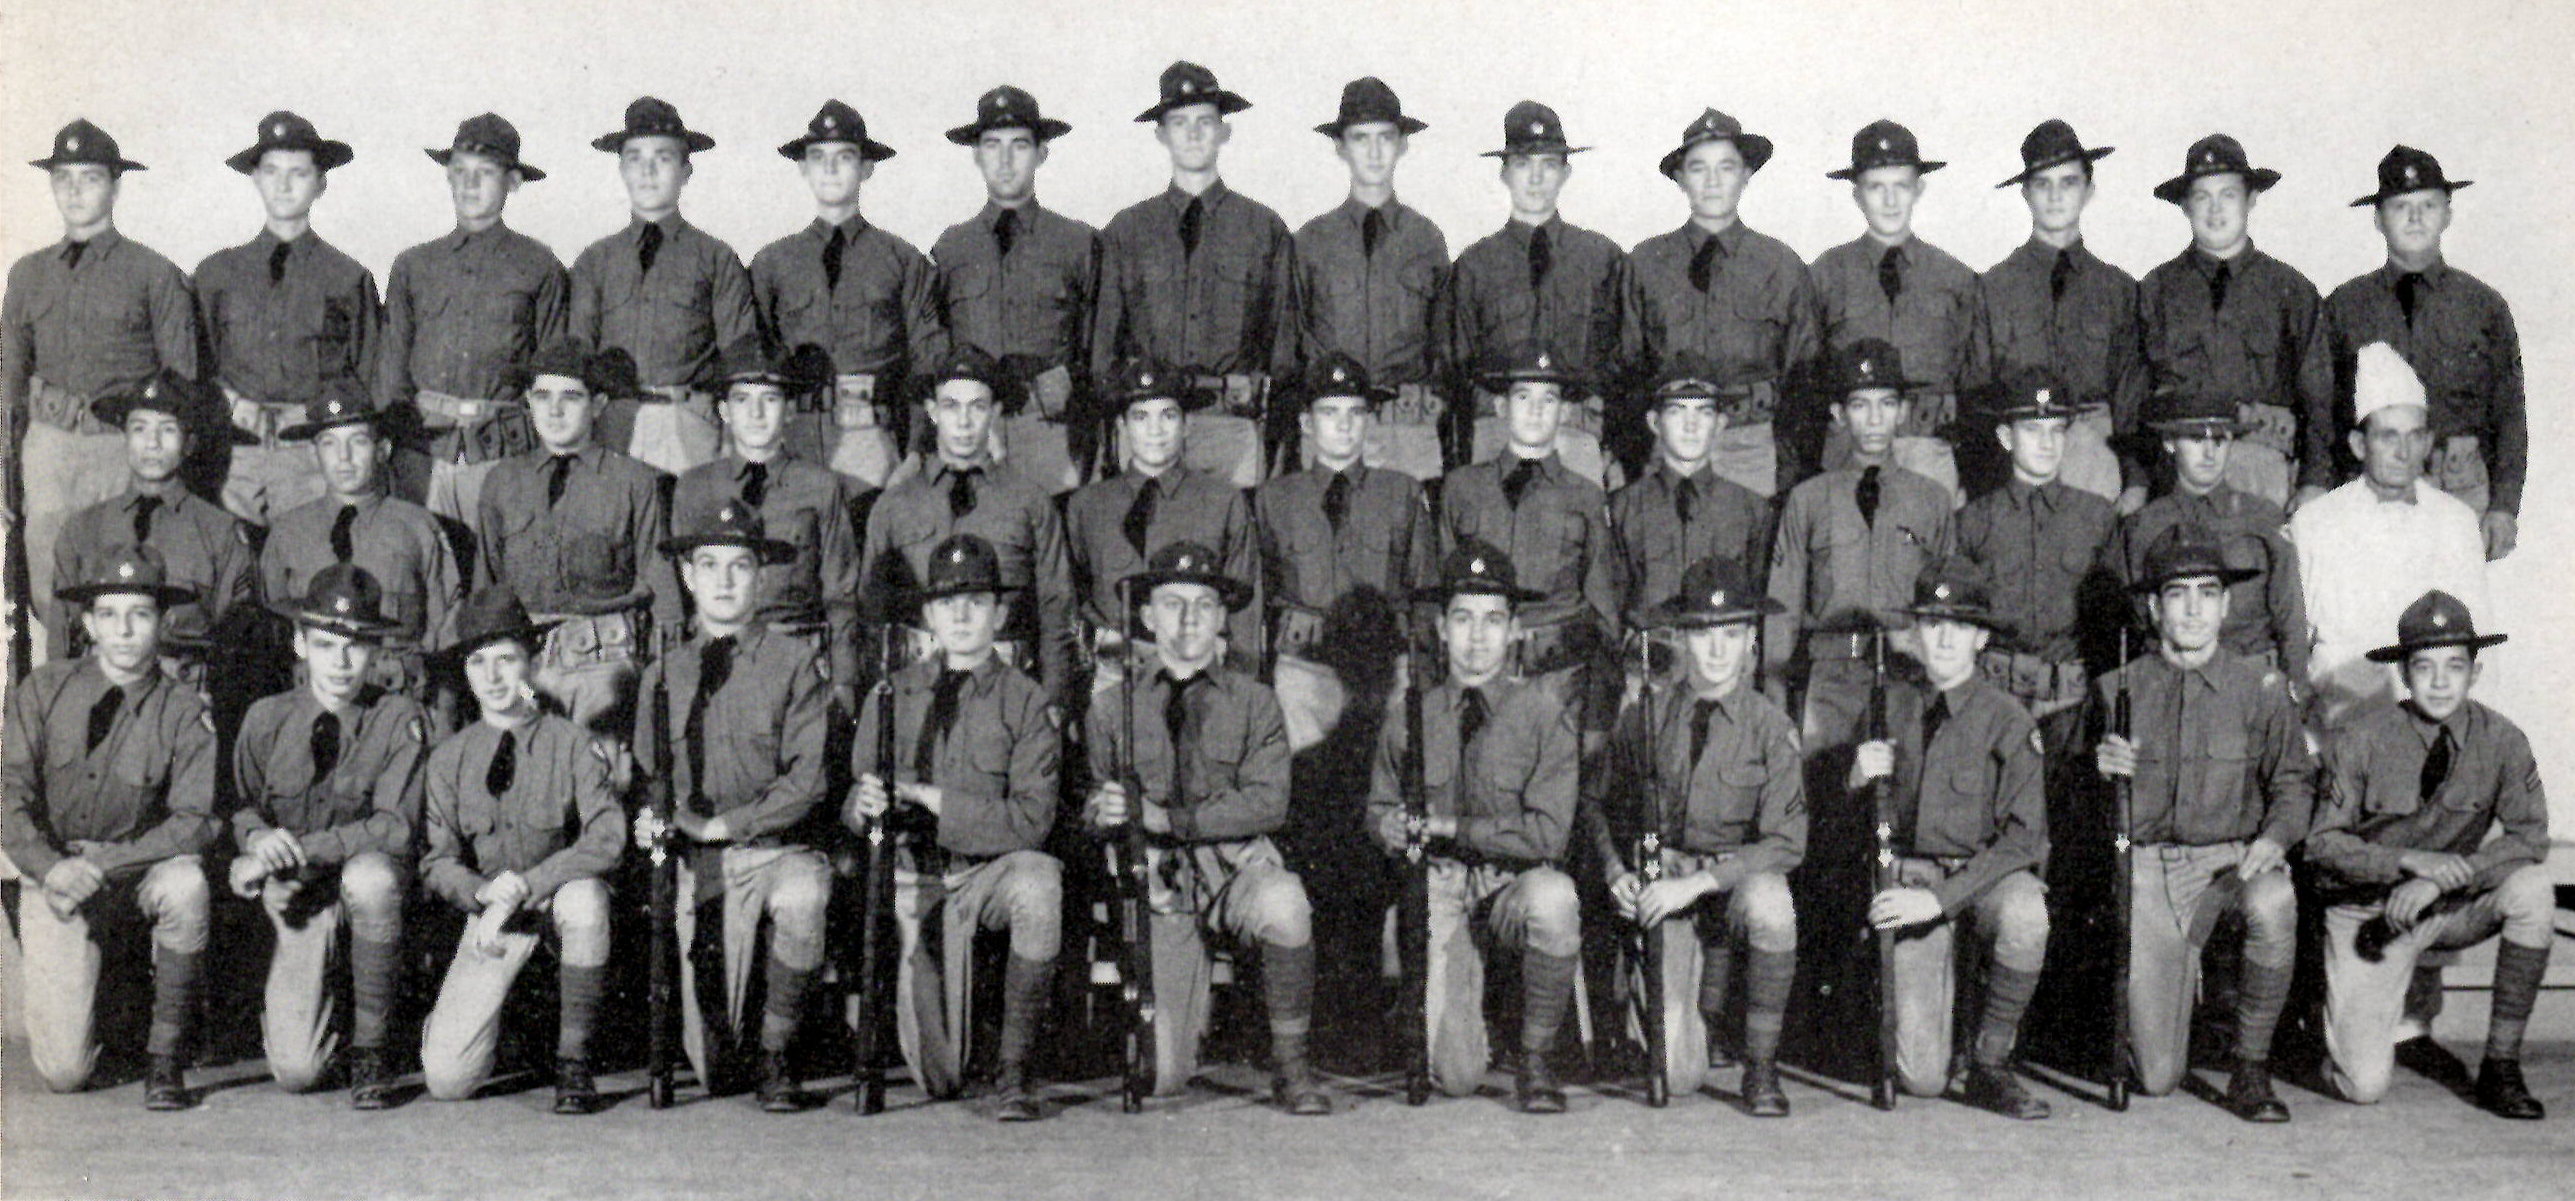 Company C 141st Infantry Regiment 36th Infantry Division - 1940